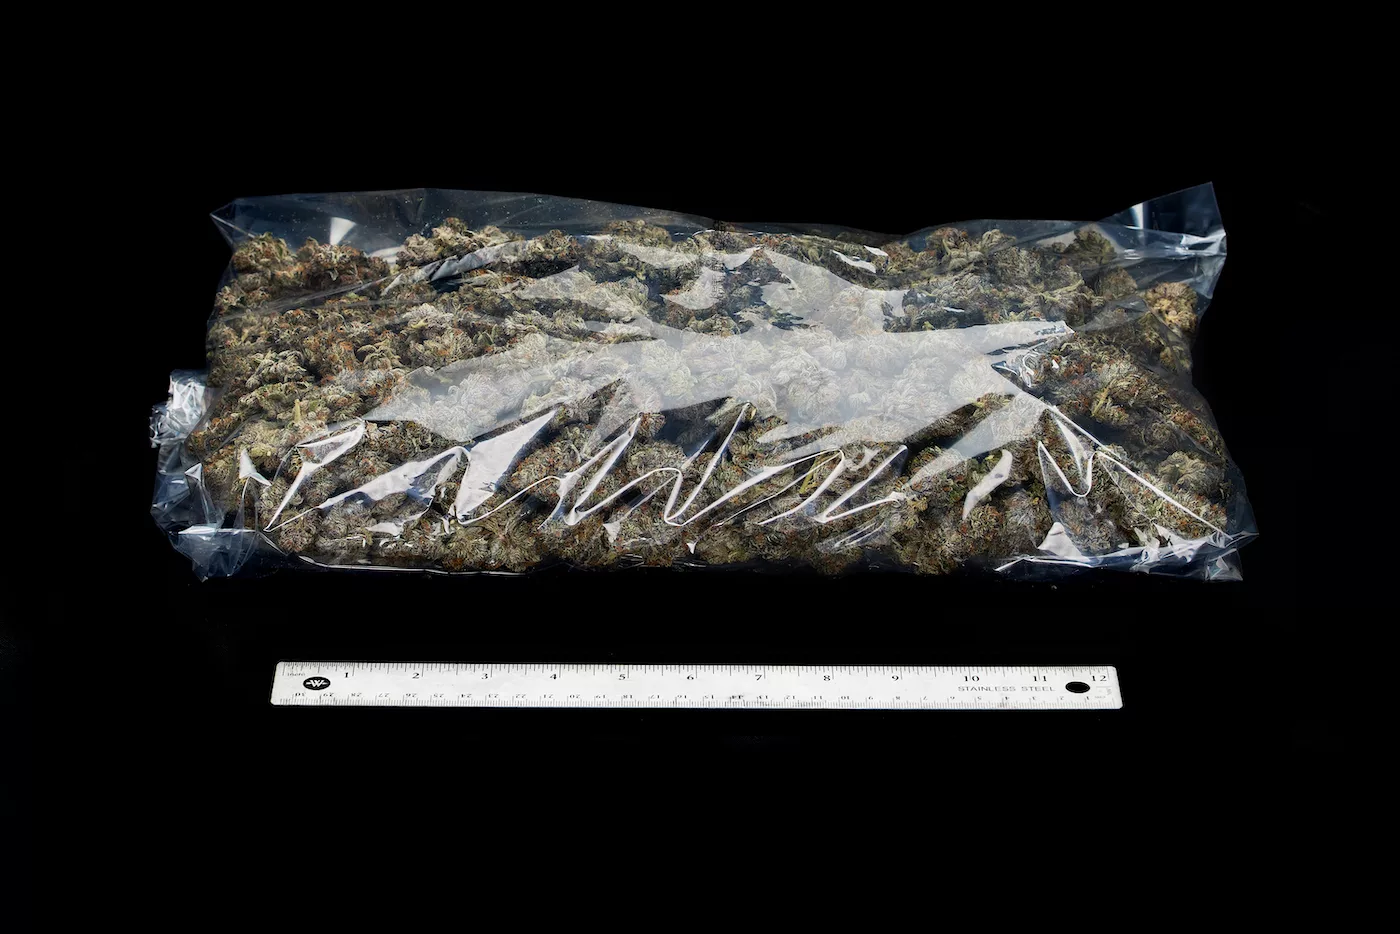 1 lb of cannabis in a bag